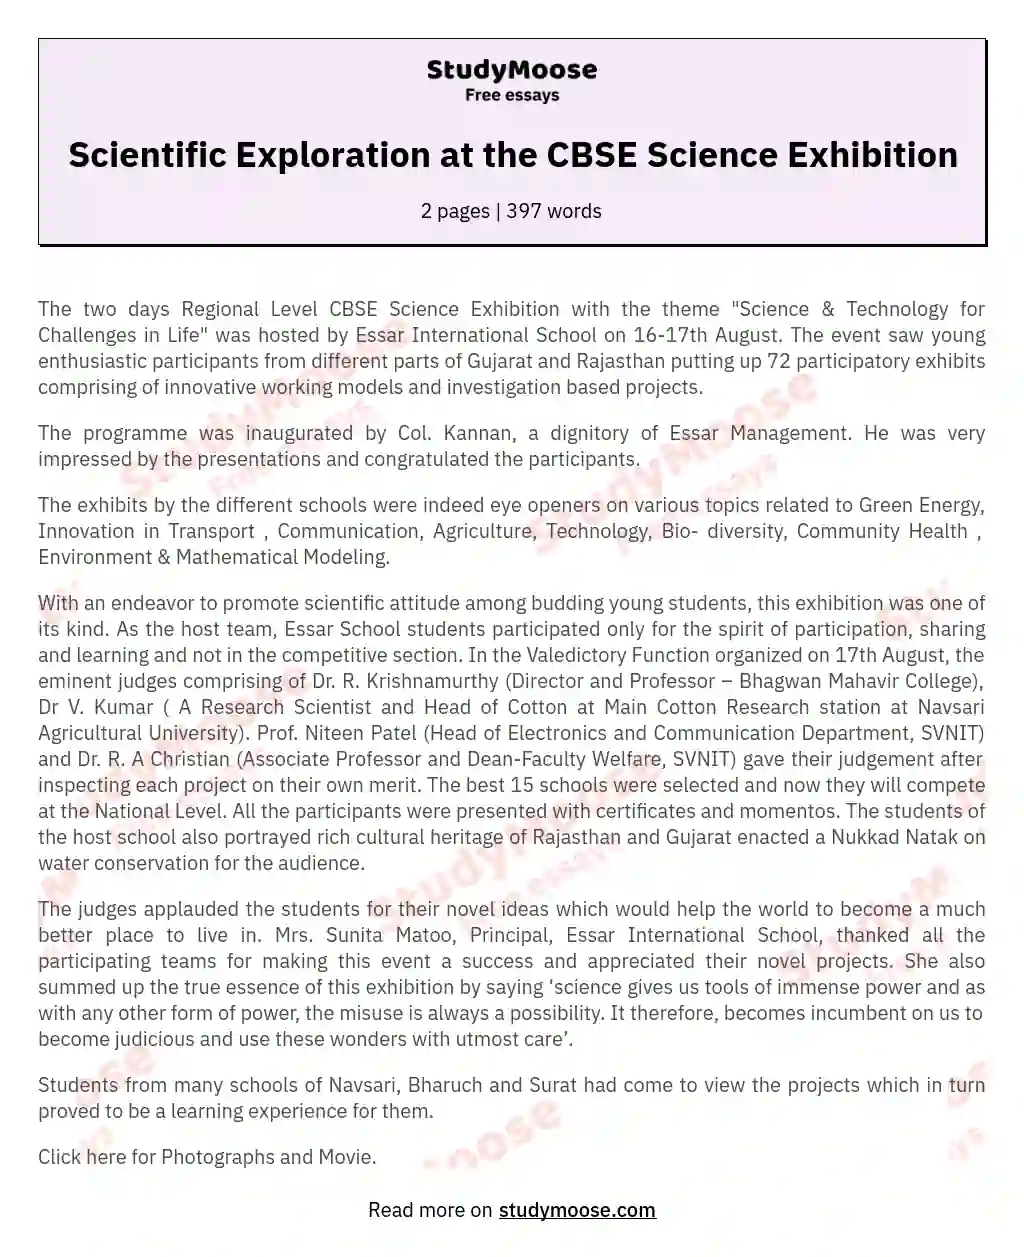 Scientific Exploration at the CBSE Science Exhibition essay